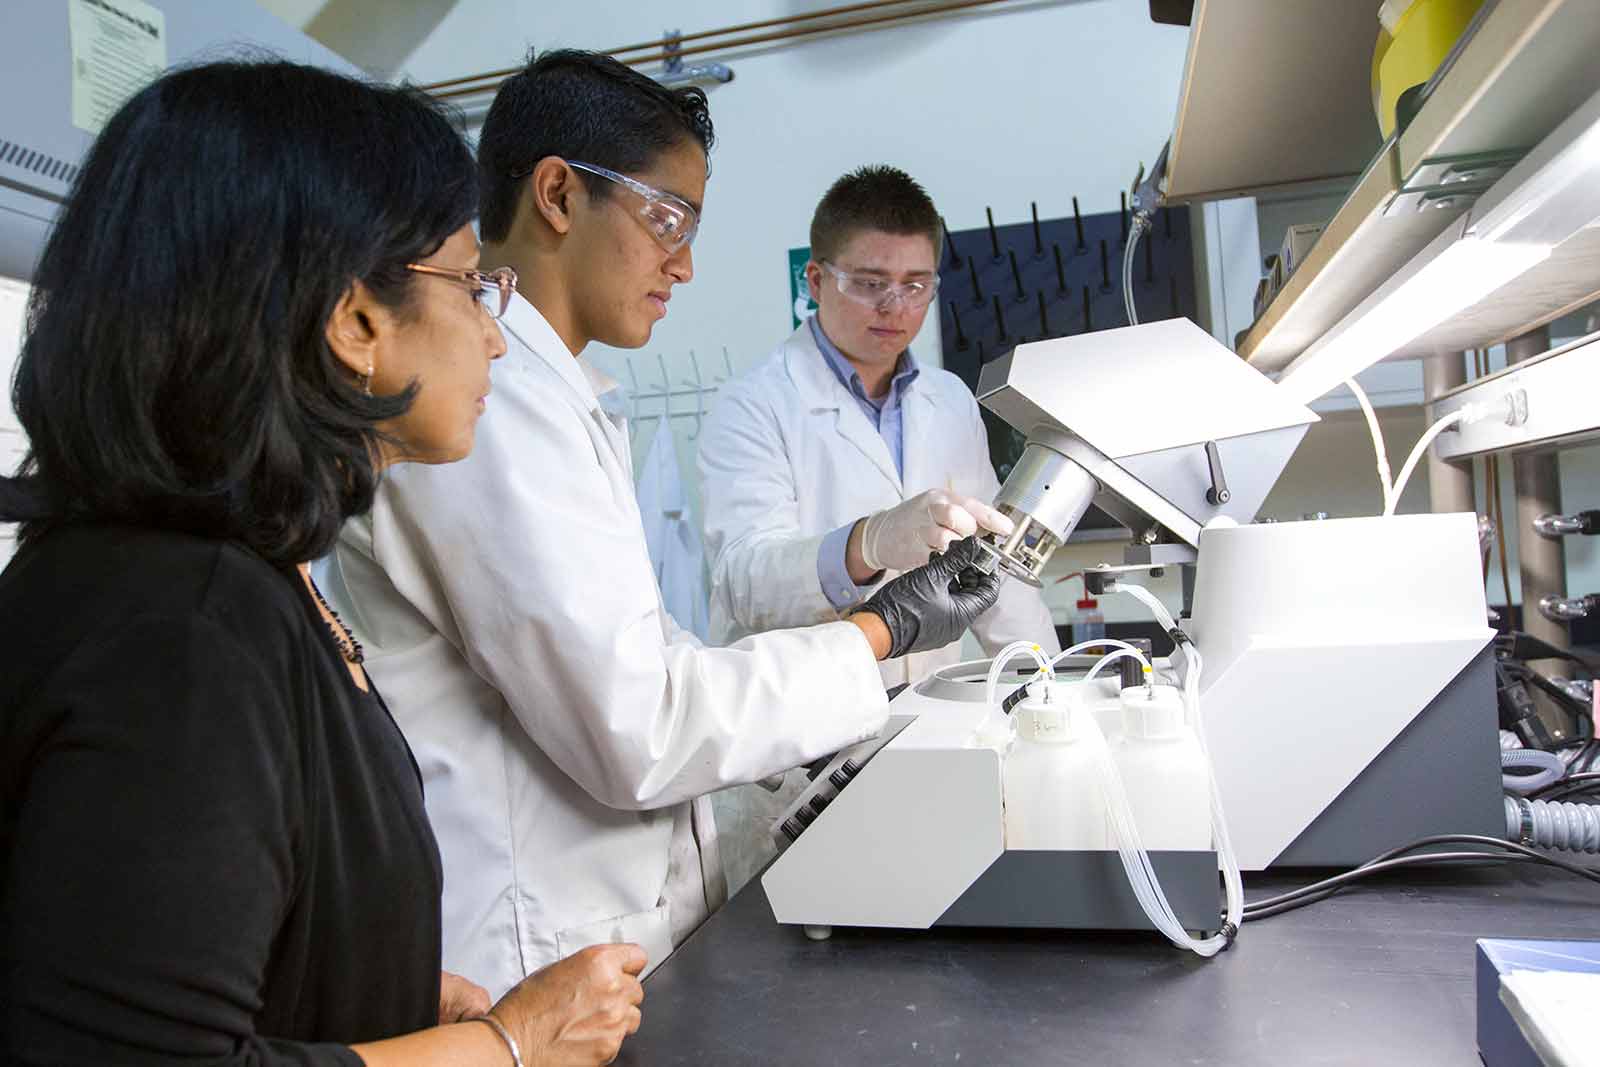 Aditi and researchers in the lab